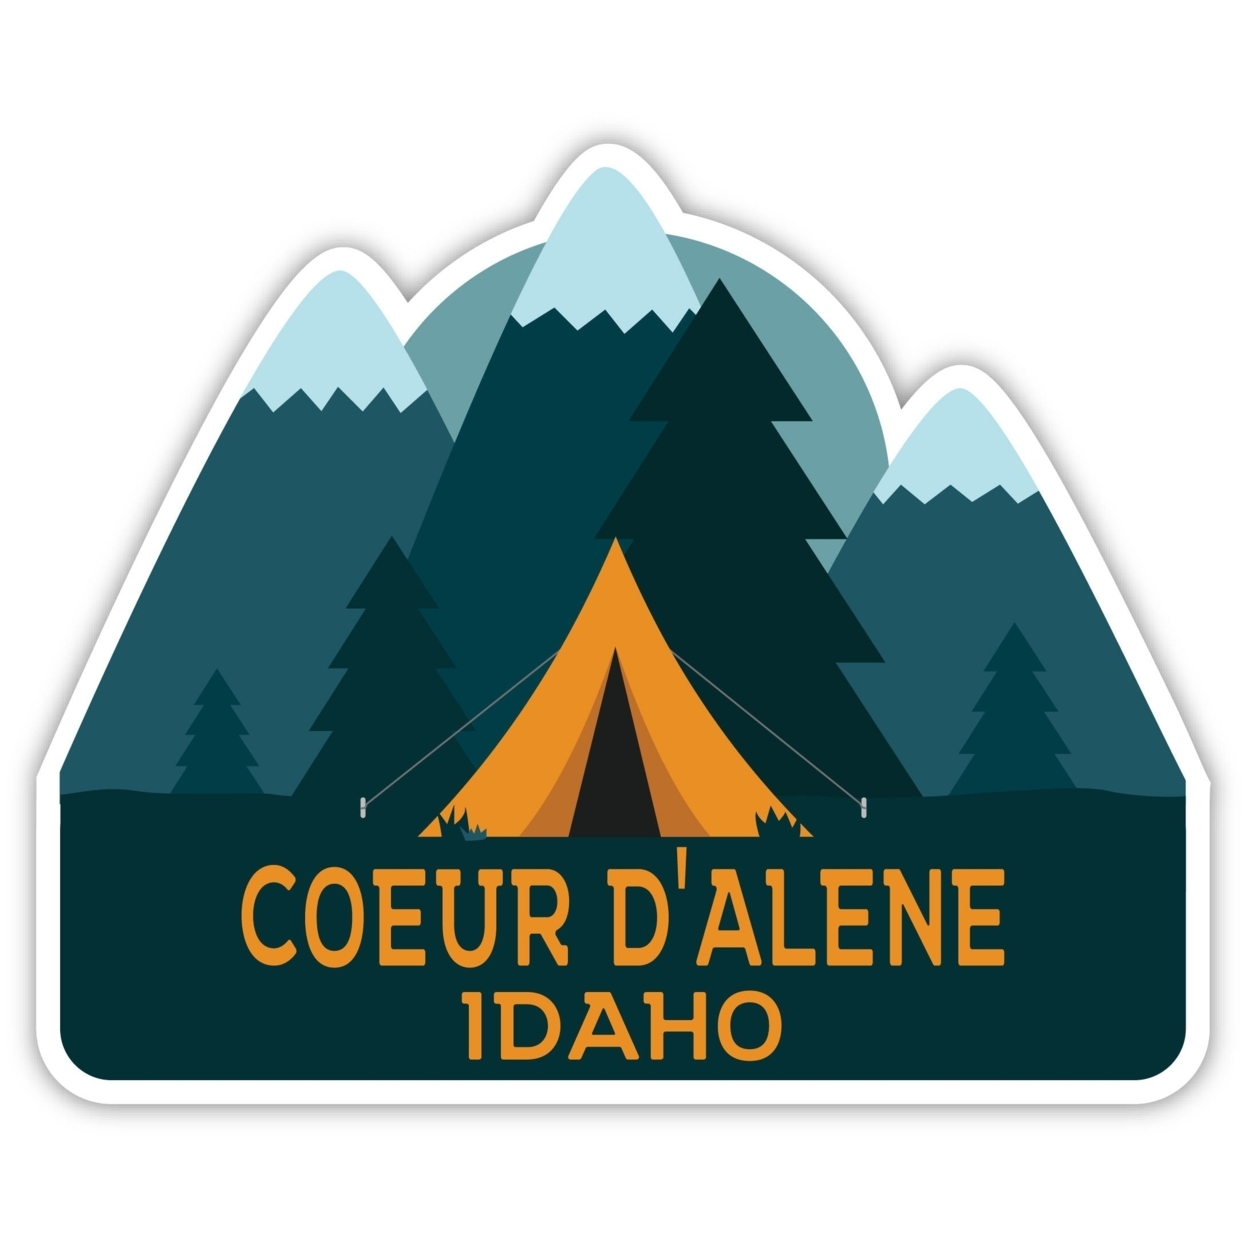 Coeur D'Alene Idaho Souvenir Decorative Stickers (Choose Theme And Size) - 4-Pack, 2-Inch, Adventures Awaits